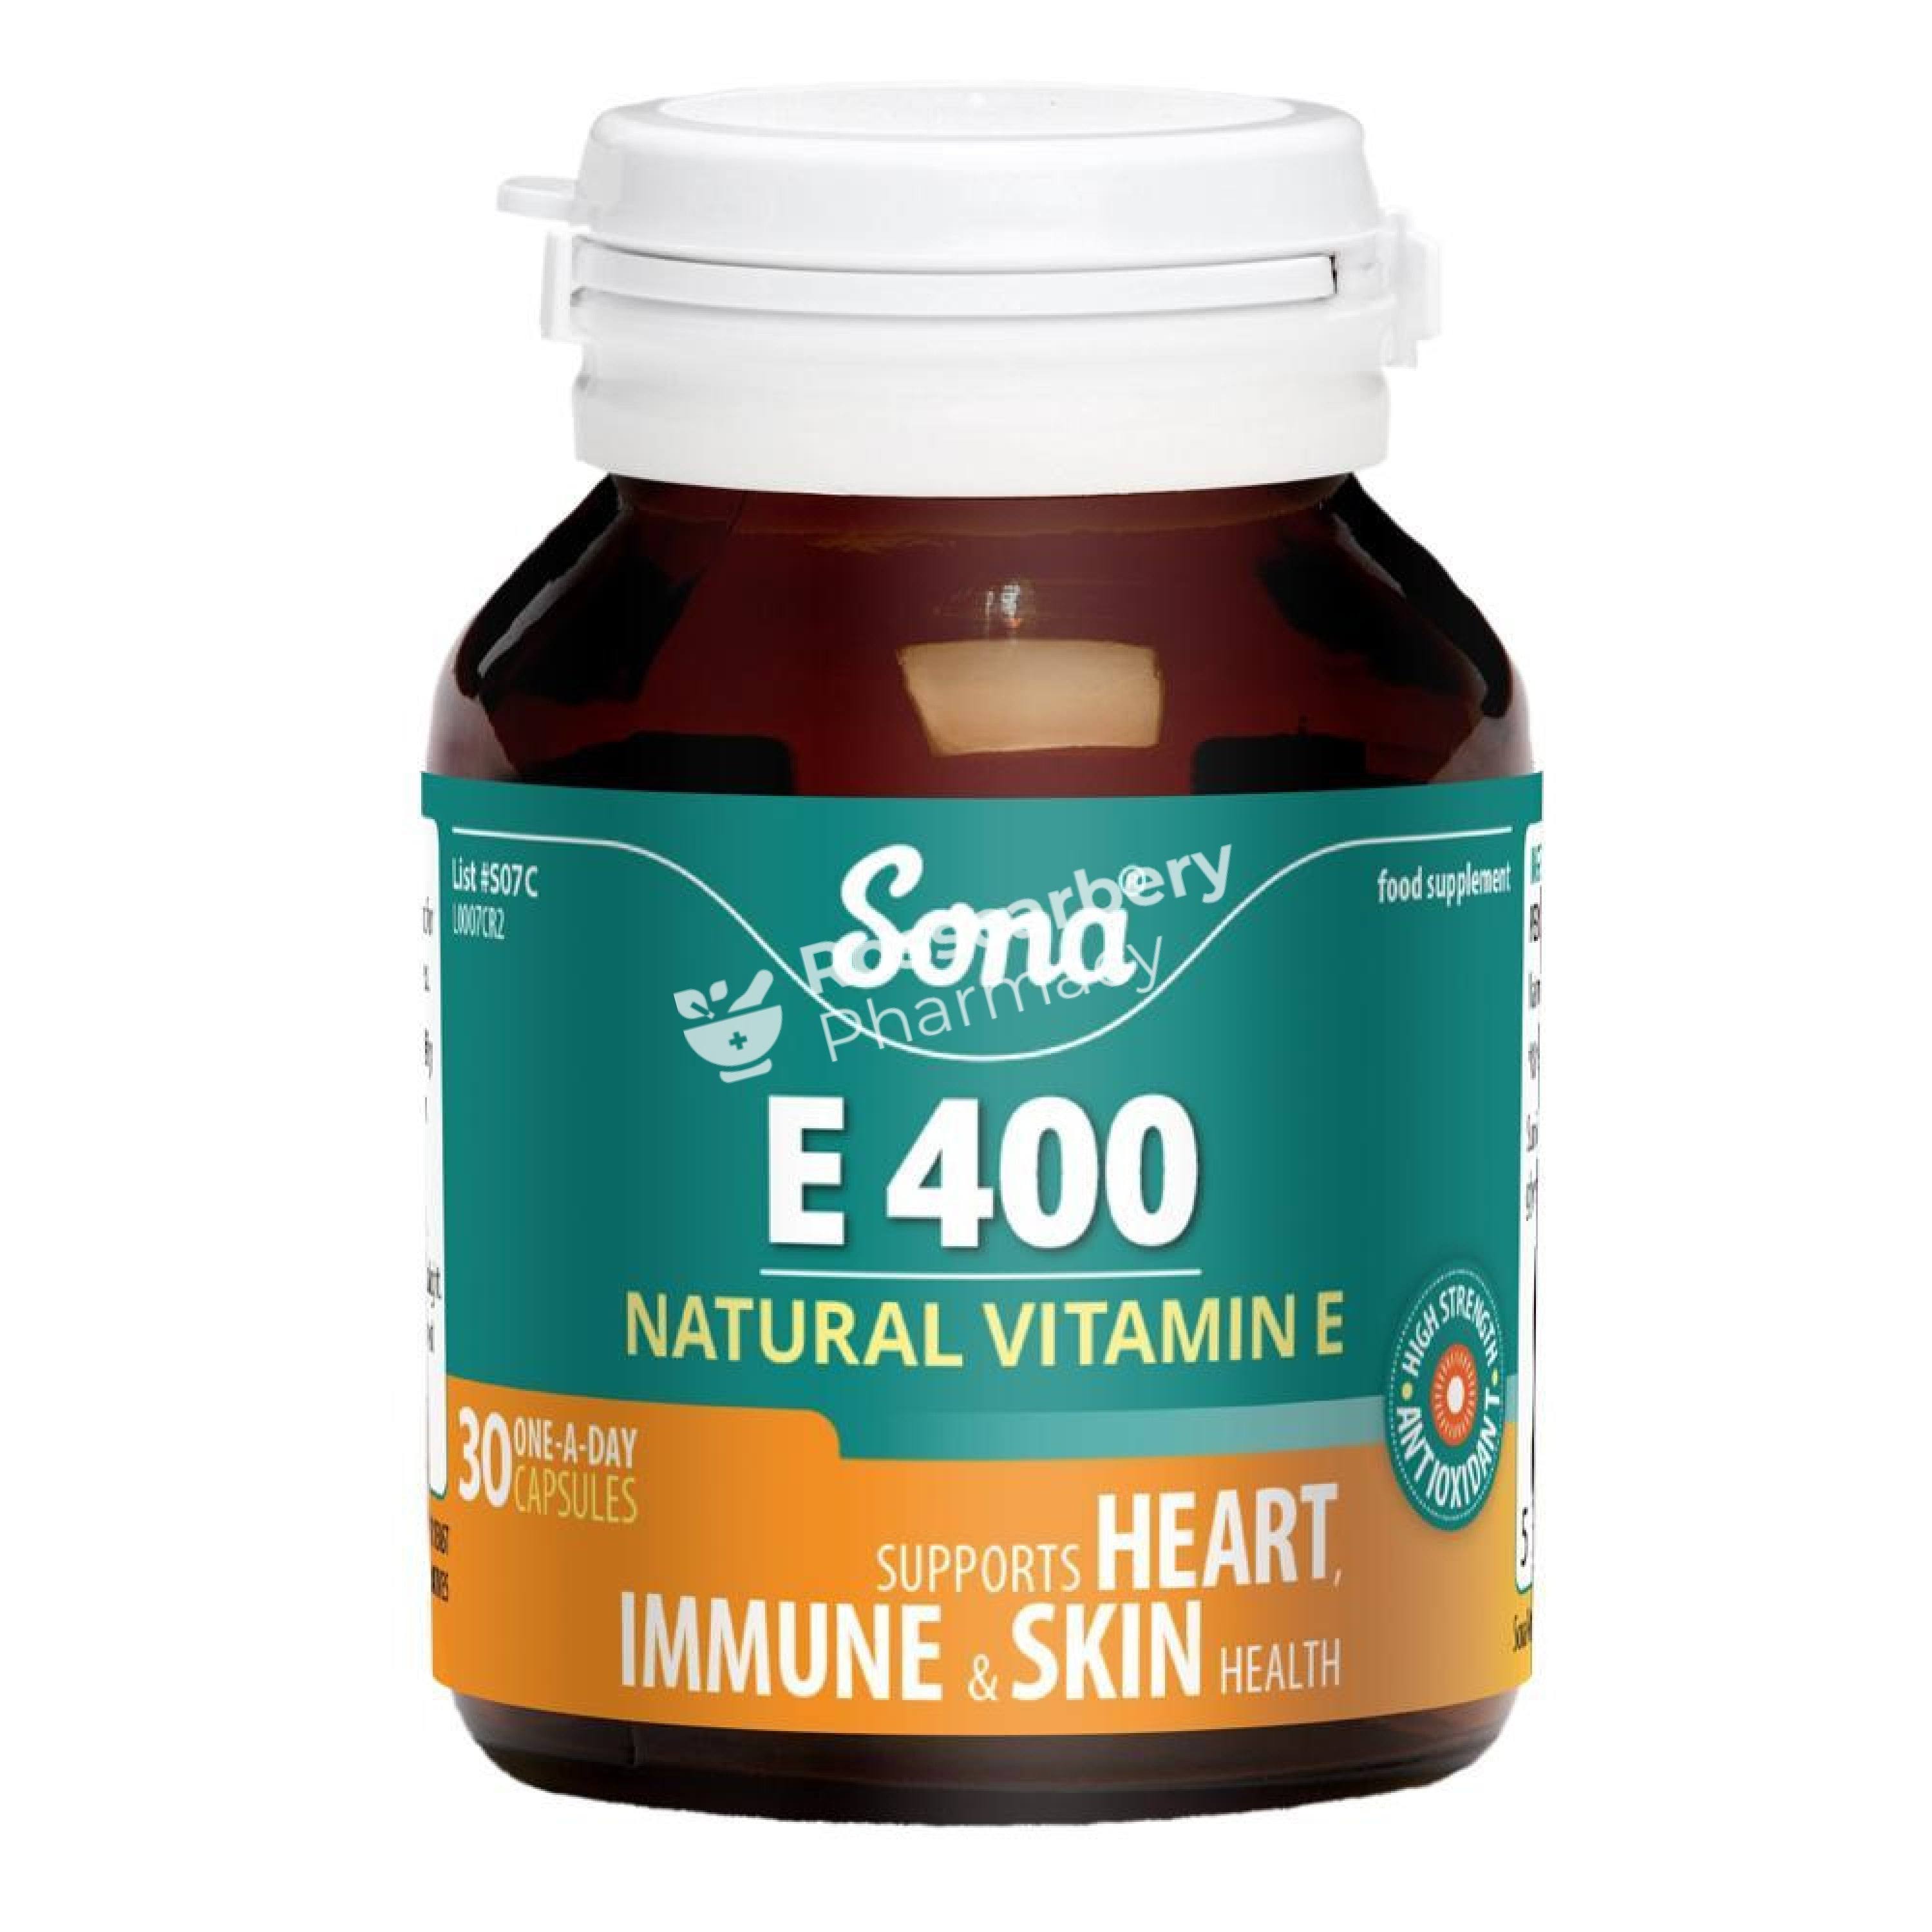 Sona E 400 Natural Vitamin E - 60 Tablets